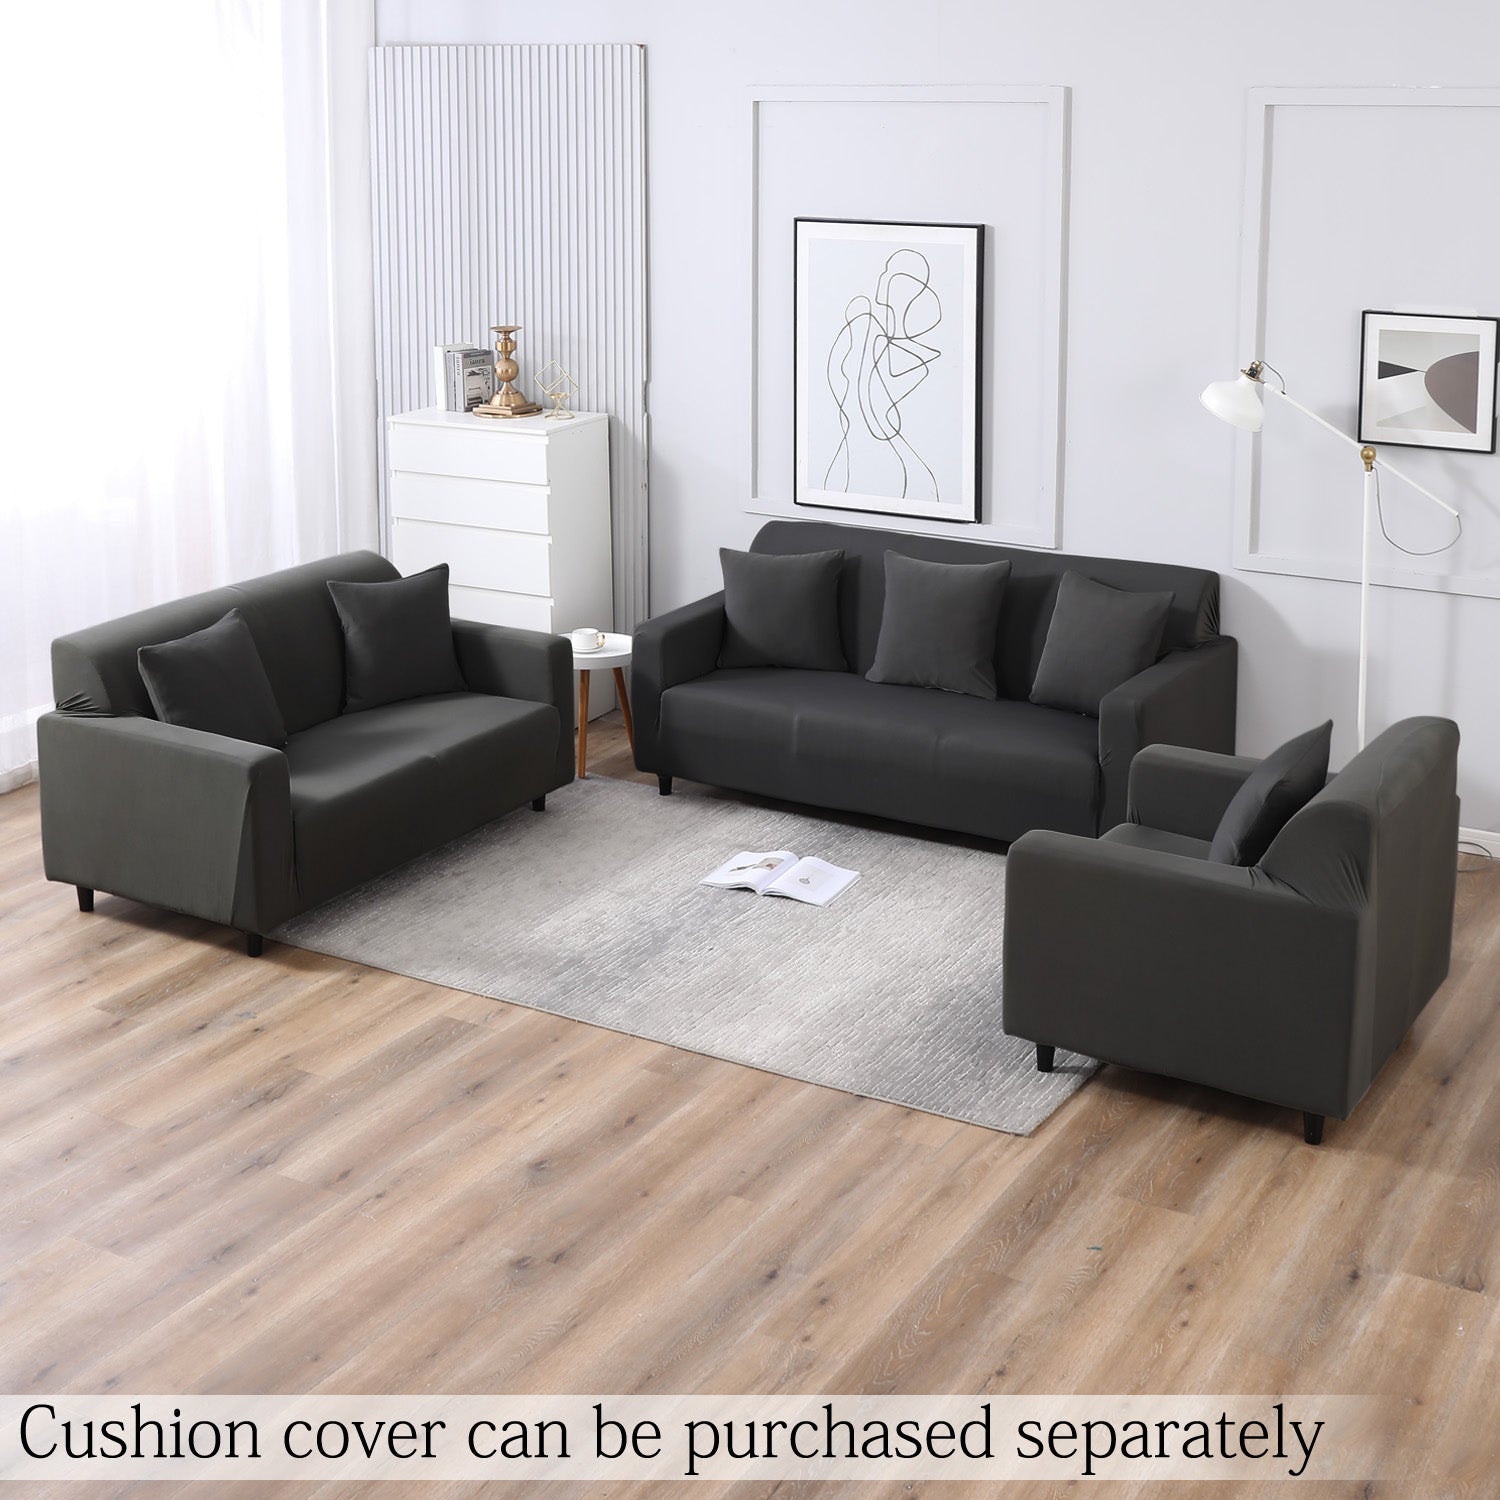 Elastic Stretchable Sofa Cover, Dark grey